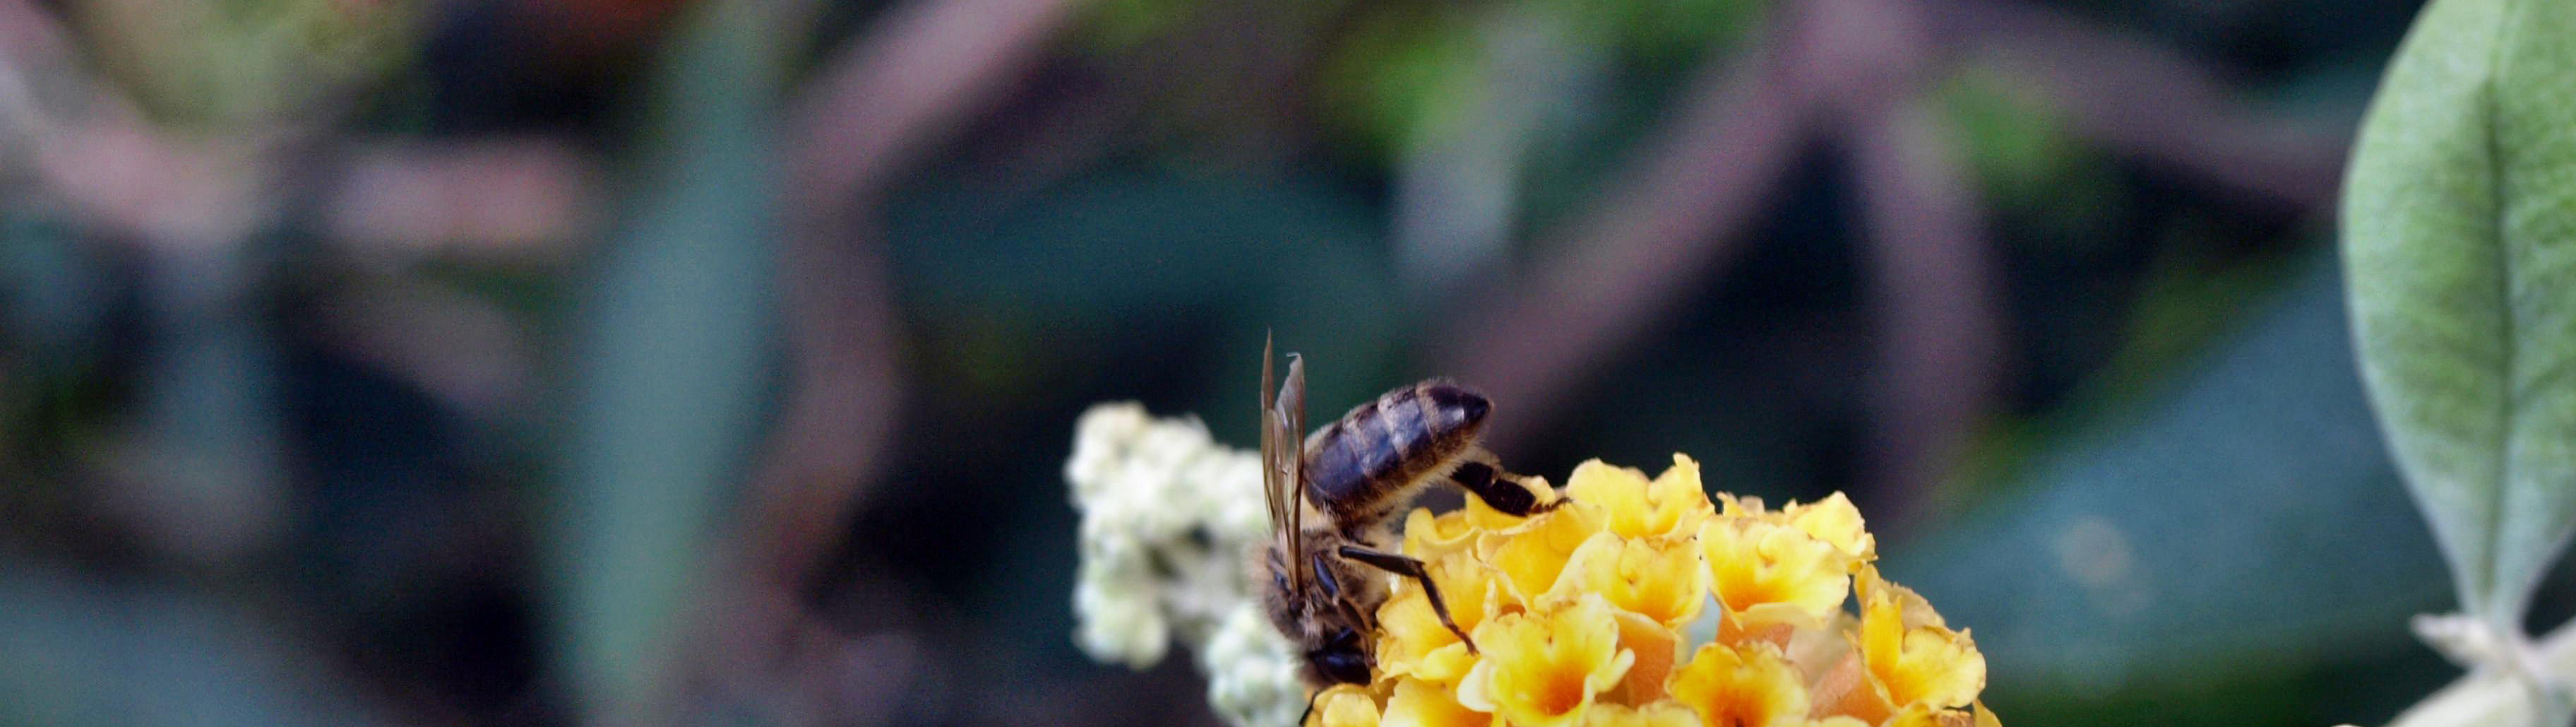 seguridad colmenas bee2keeper ingenieros localiza